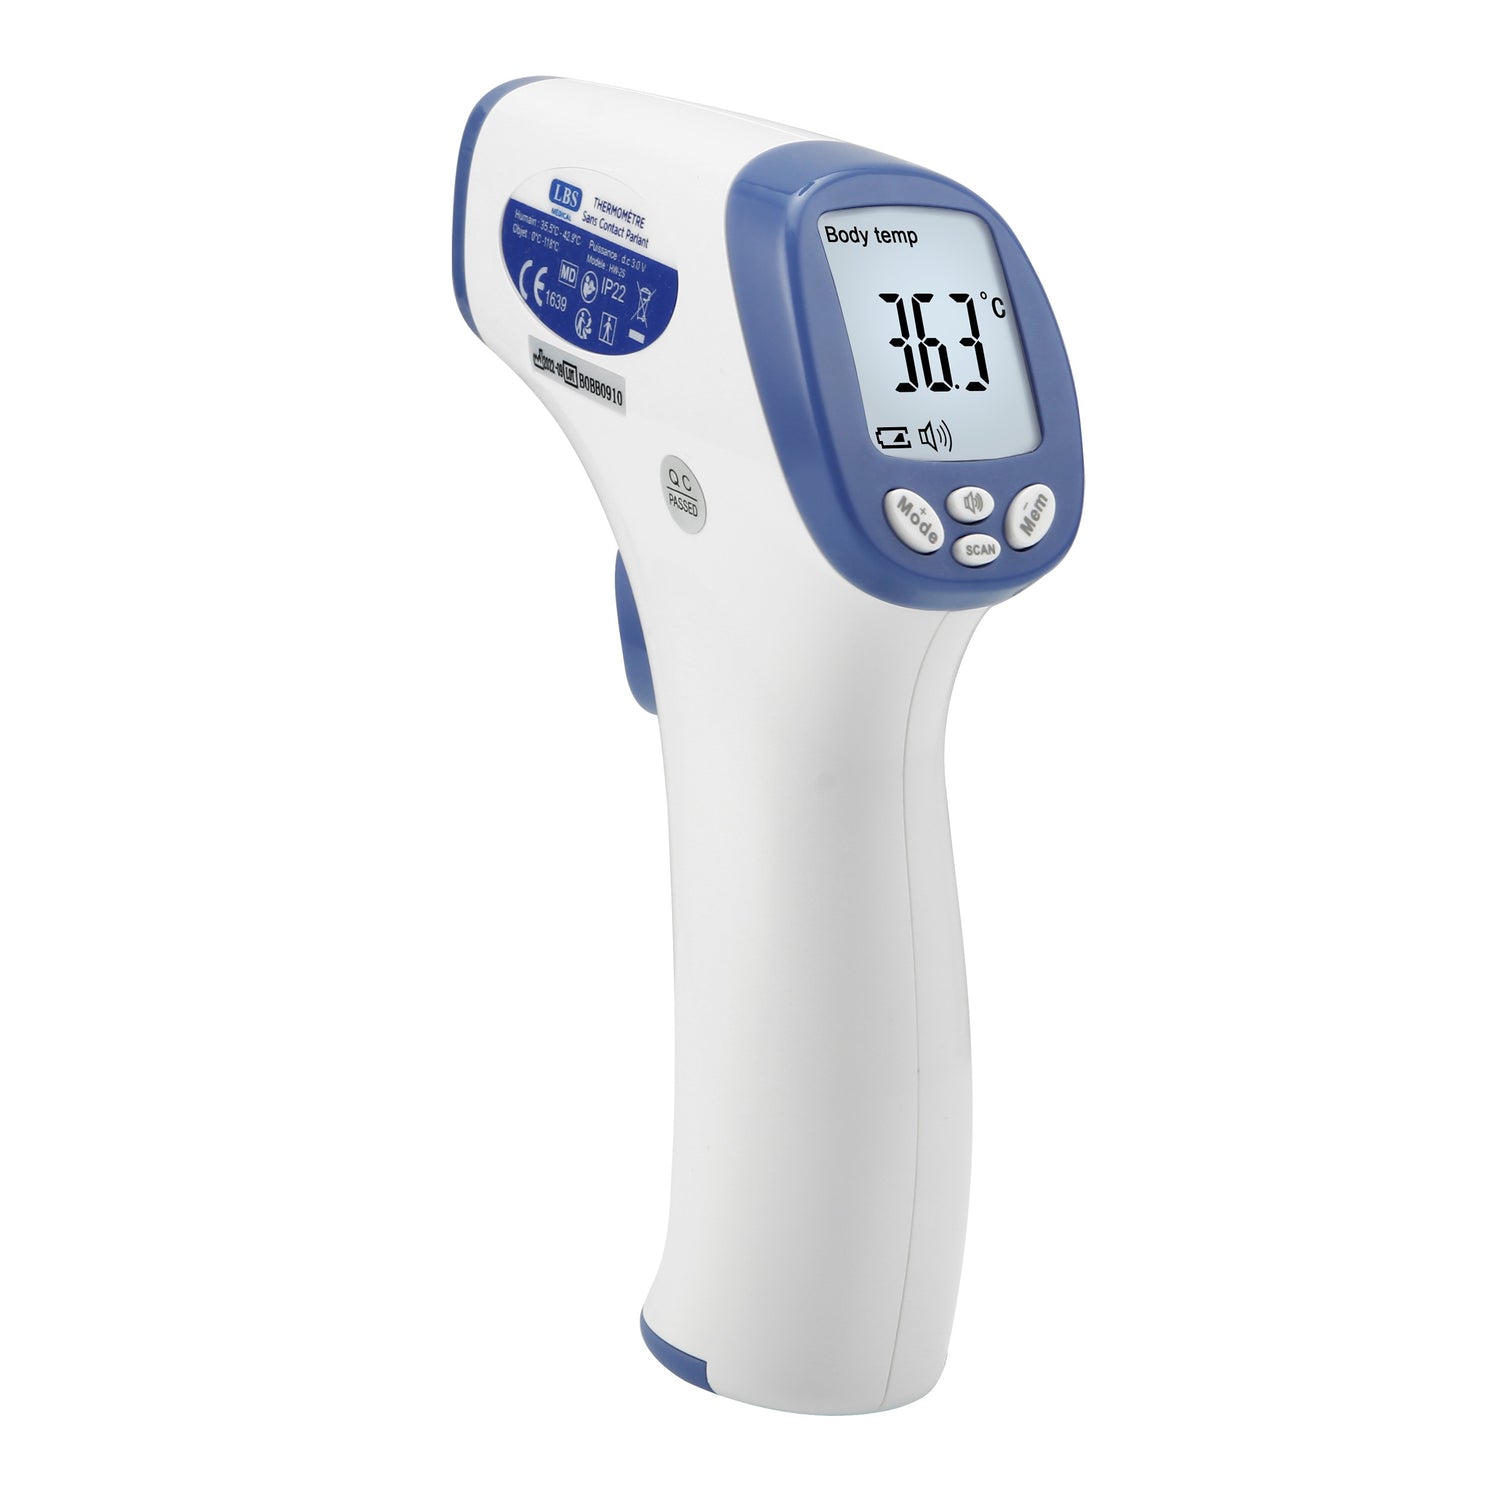 Thermomètre frontal sans contact TSC19 de BC Pharma